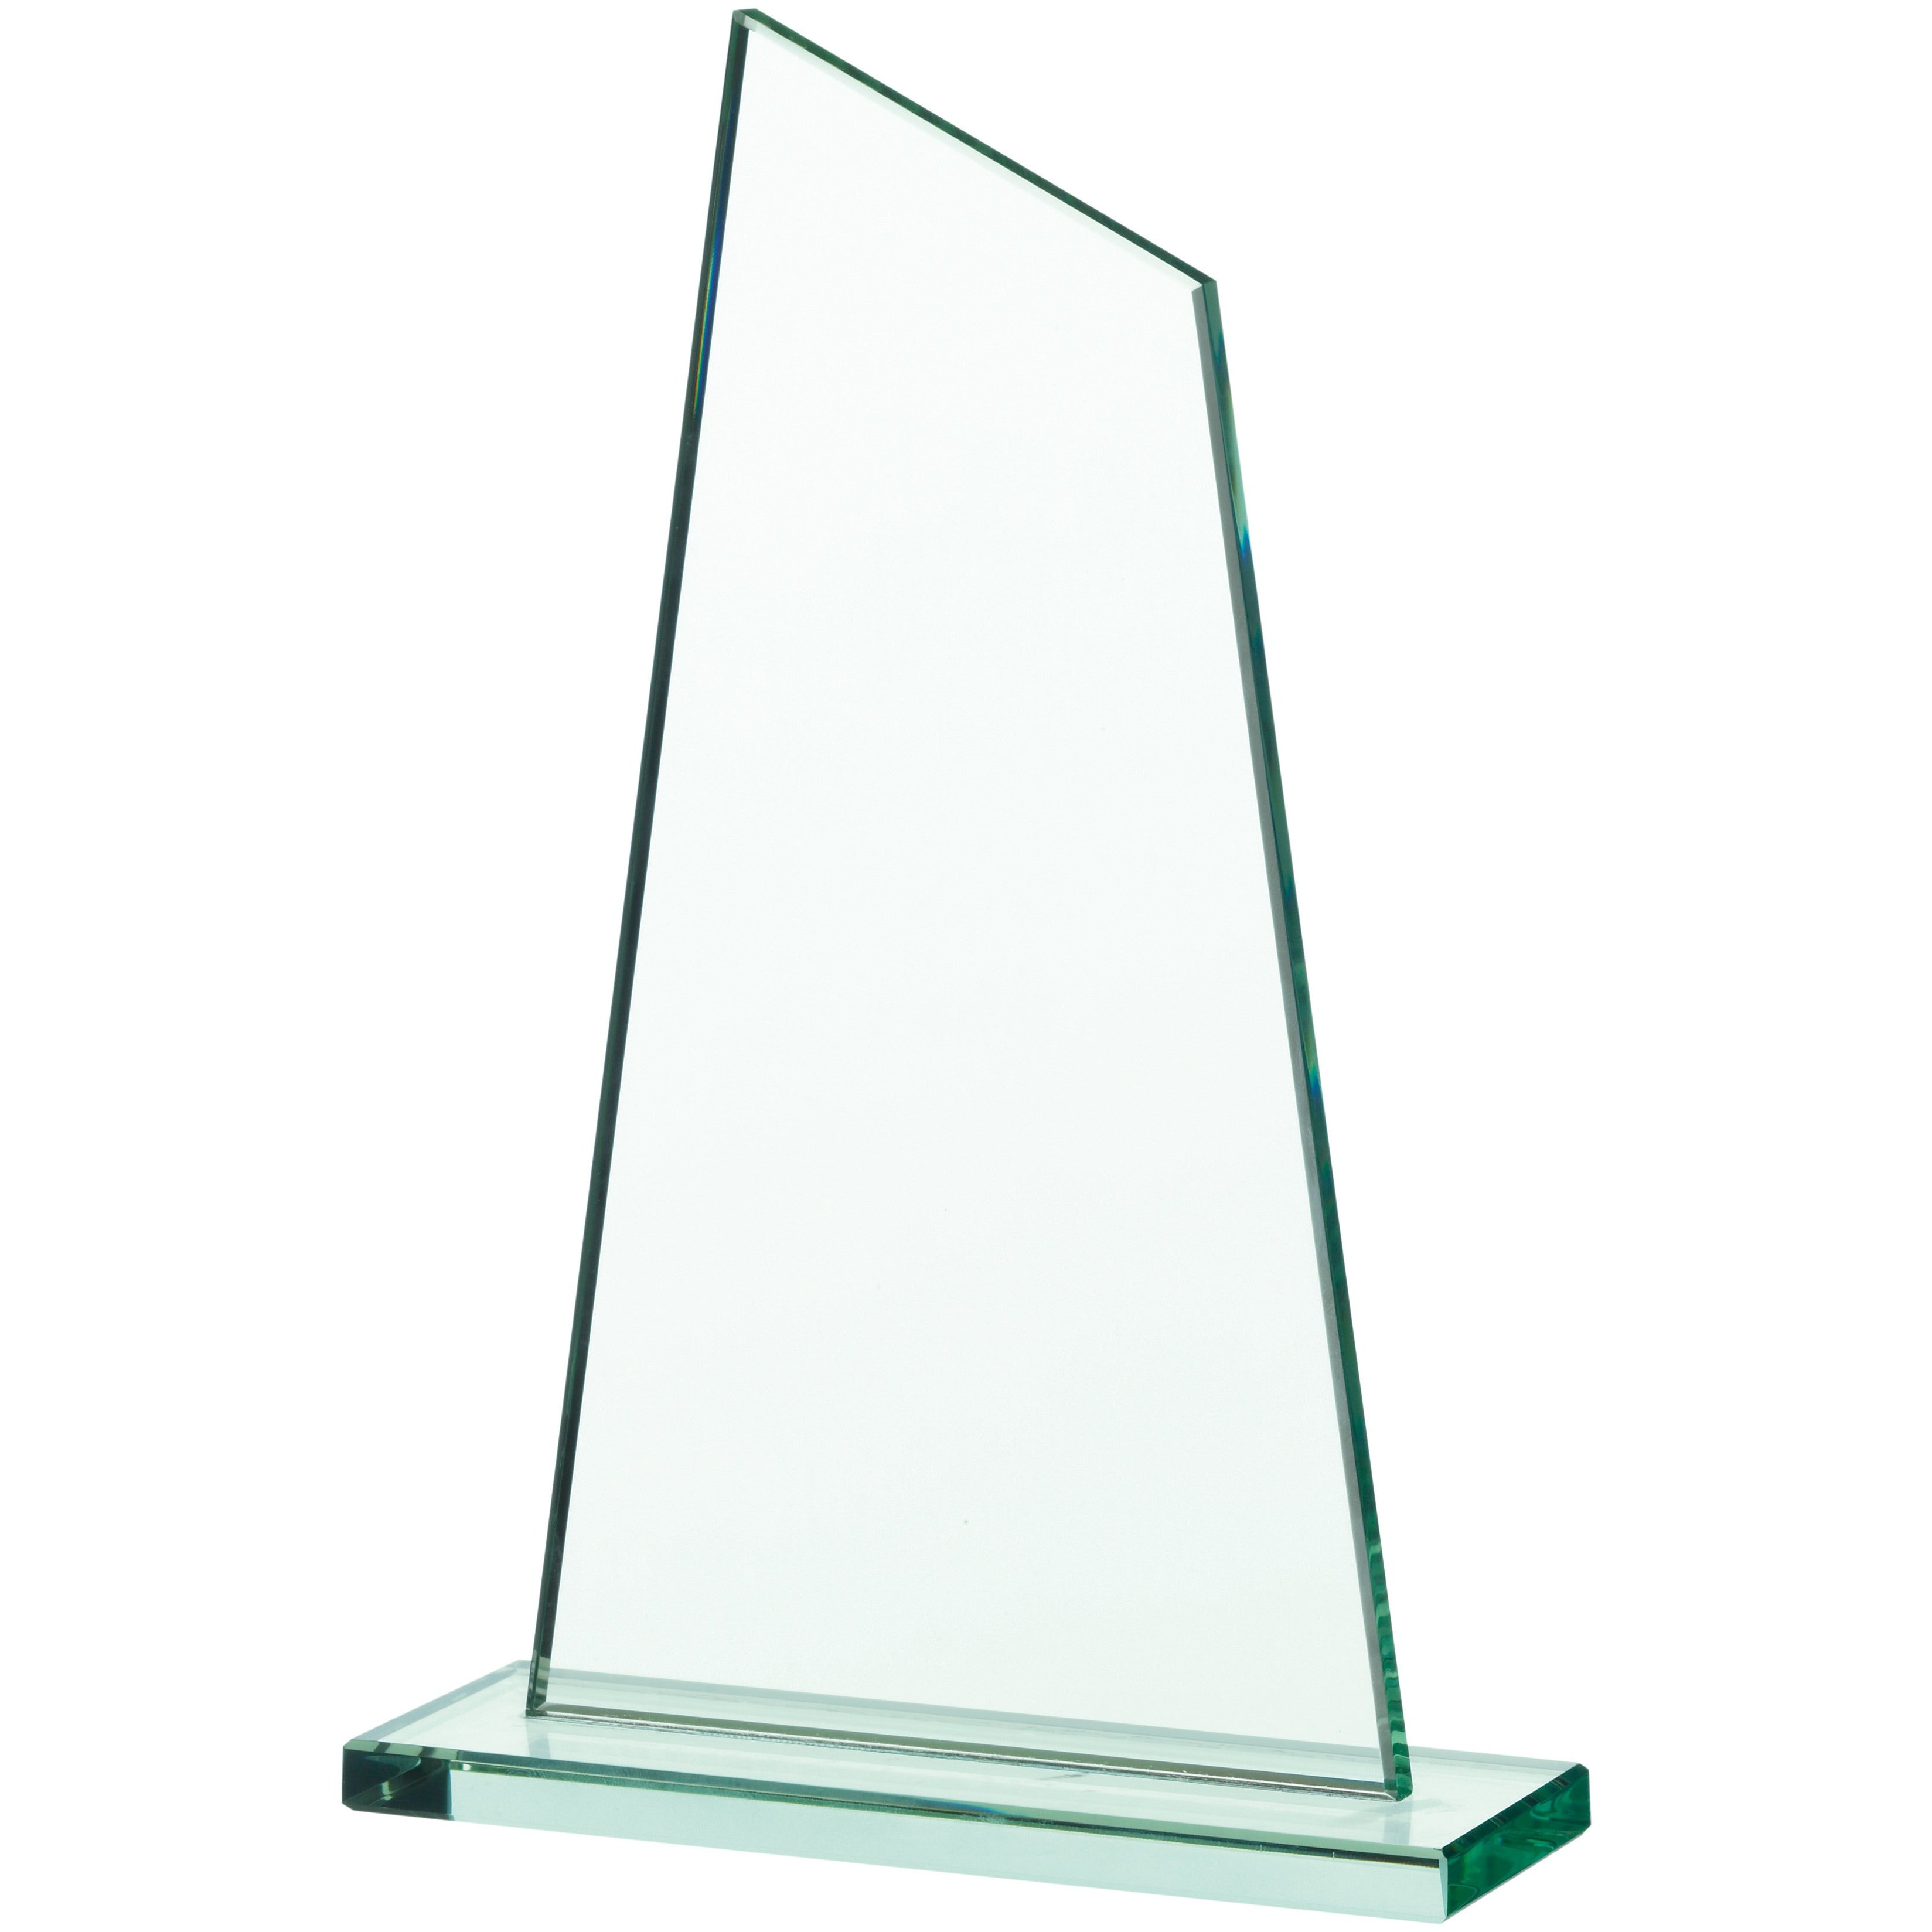 Jade Glass Sail Plaque Award (CLEARANCE)